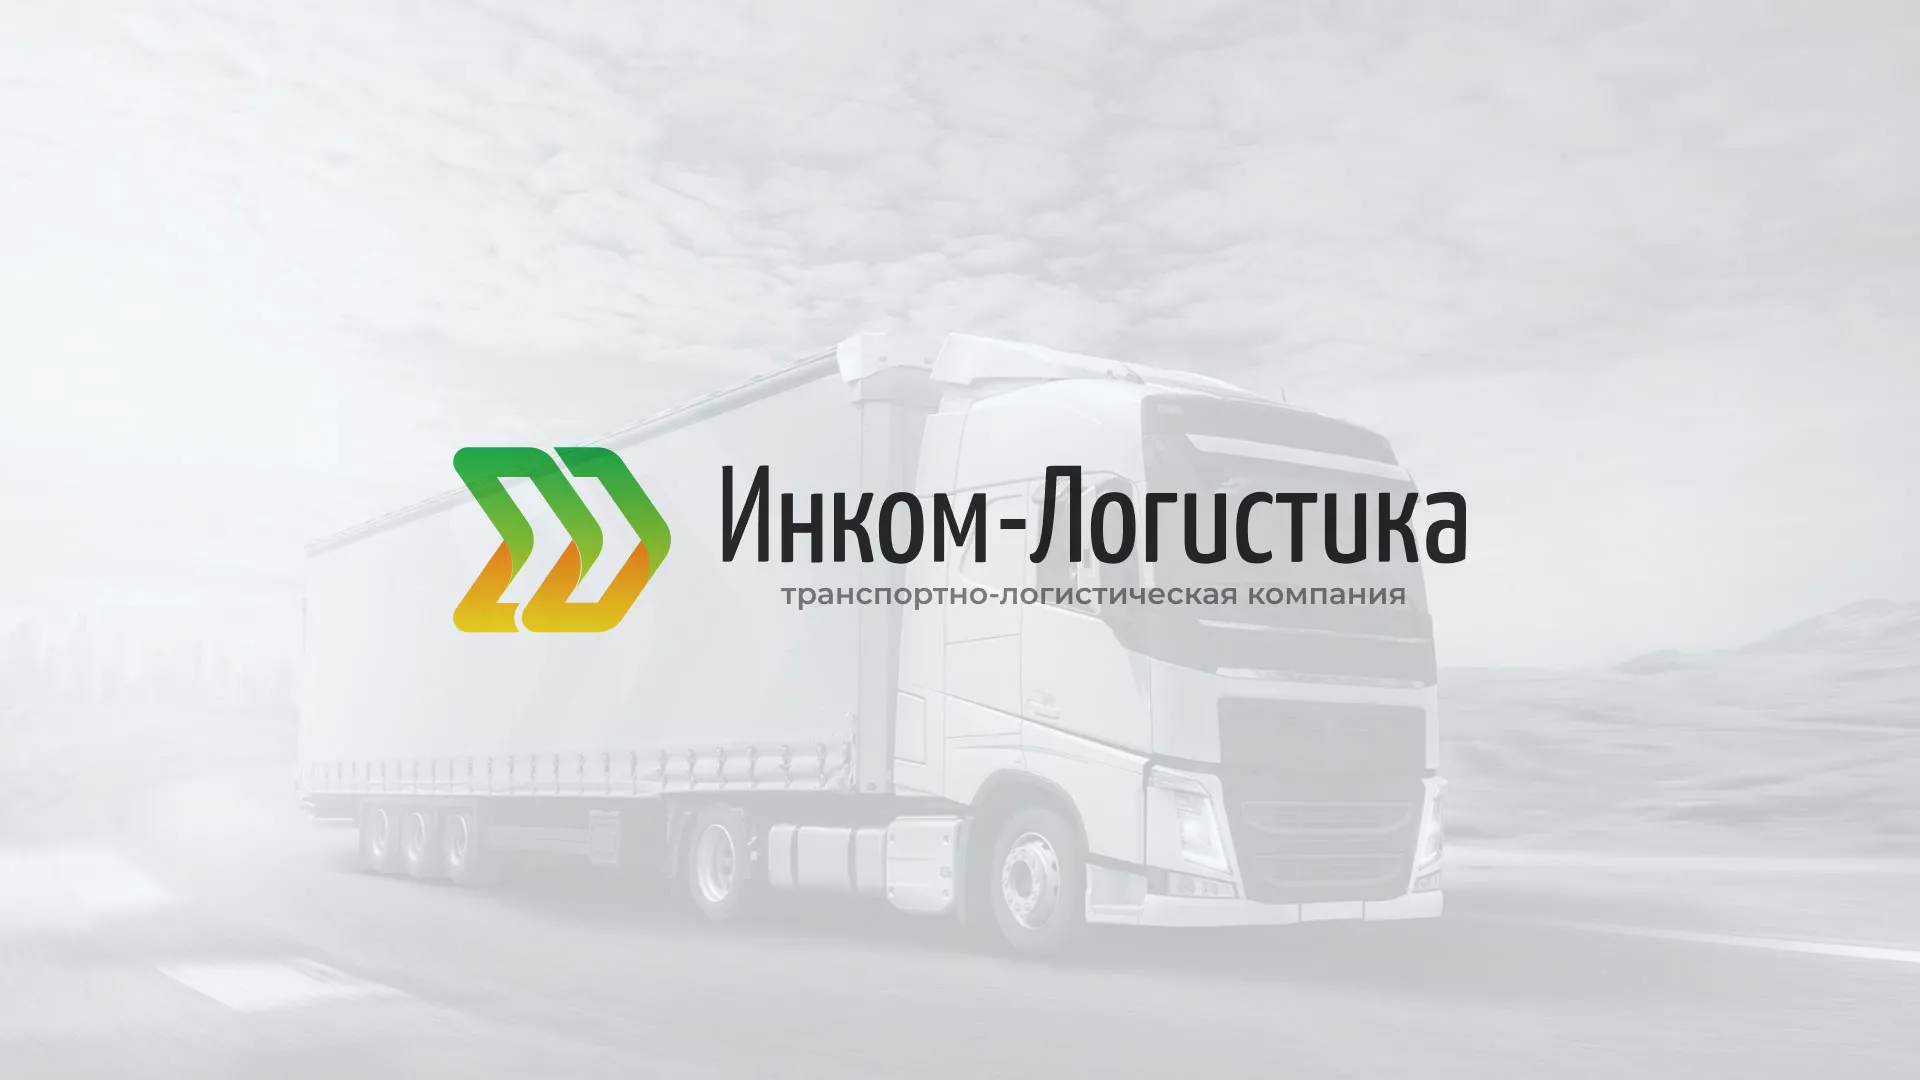 Разработка логотипа и сайта компании «Инком-Логистика» в Киржаче